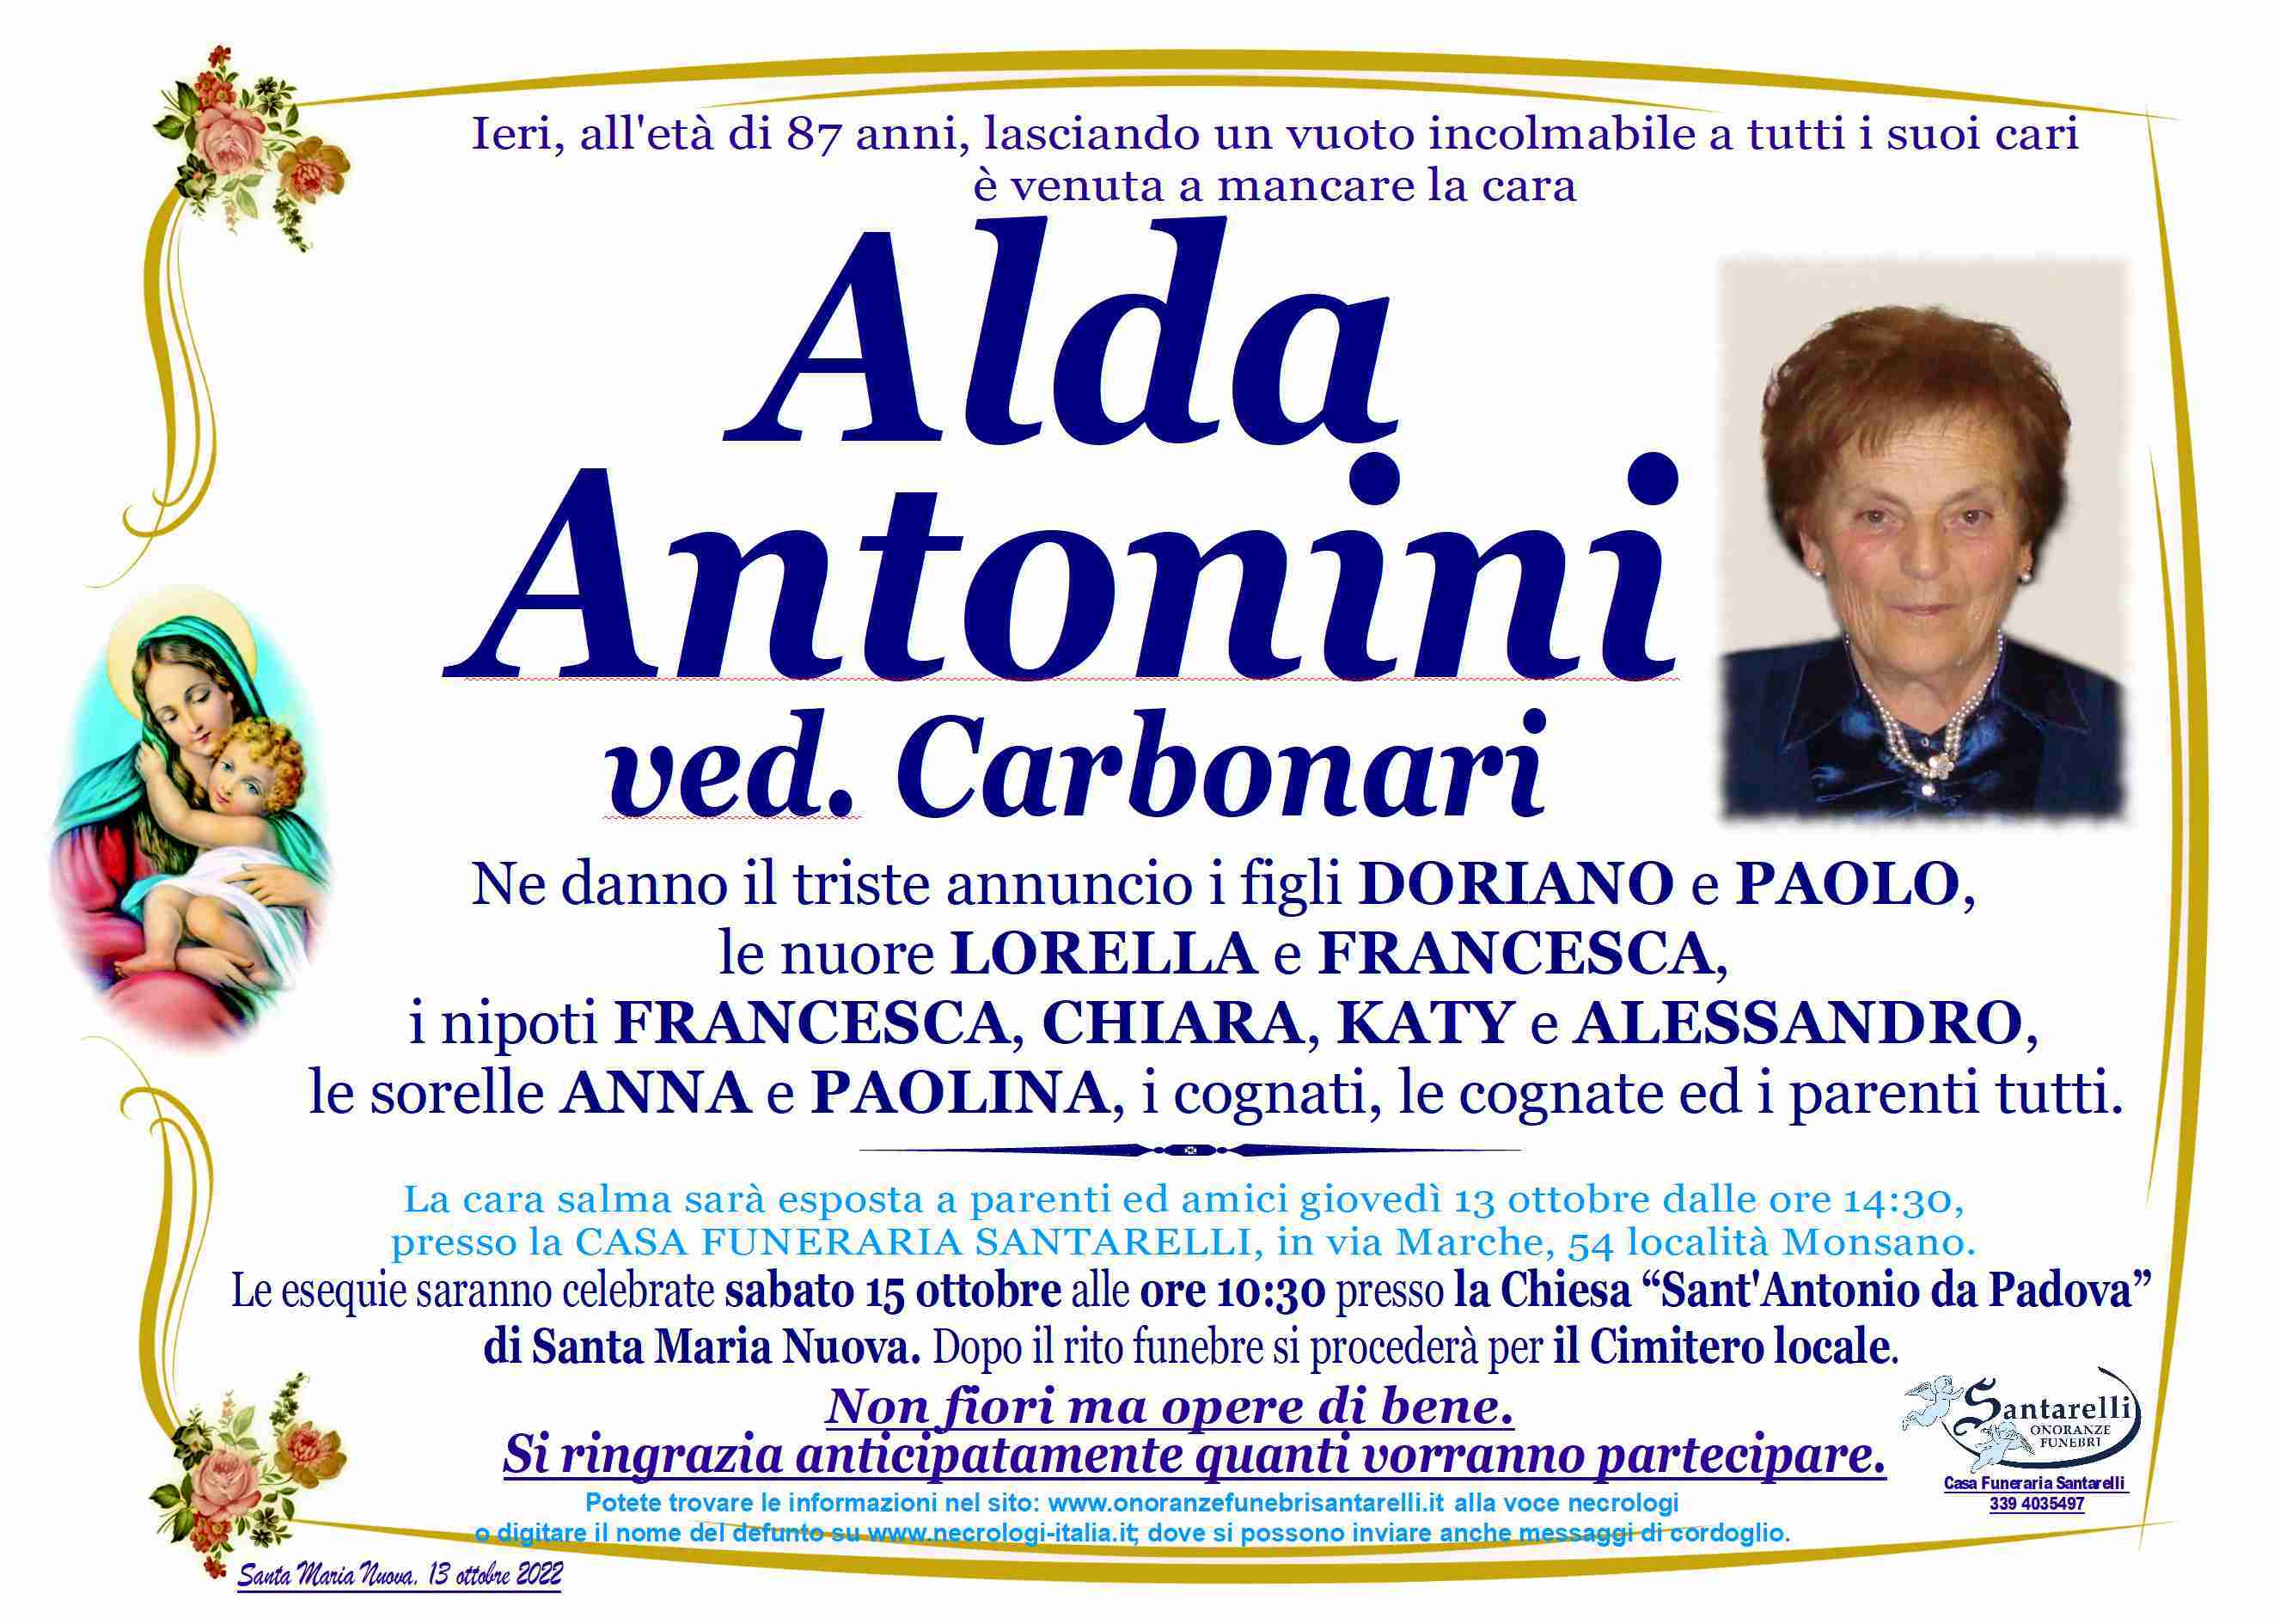 Alda Antonini